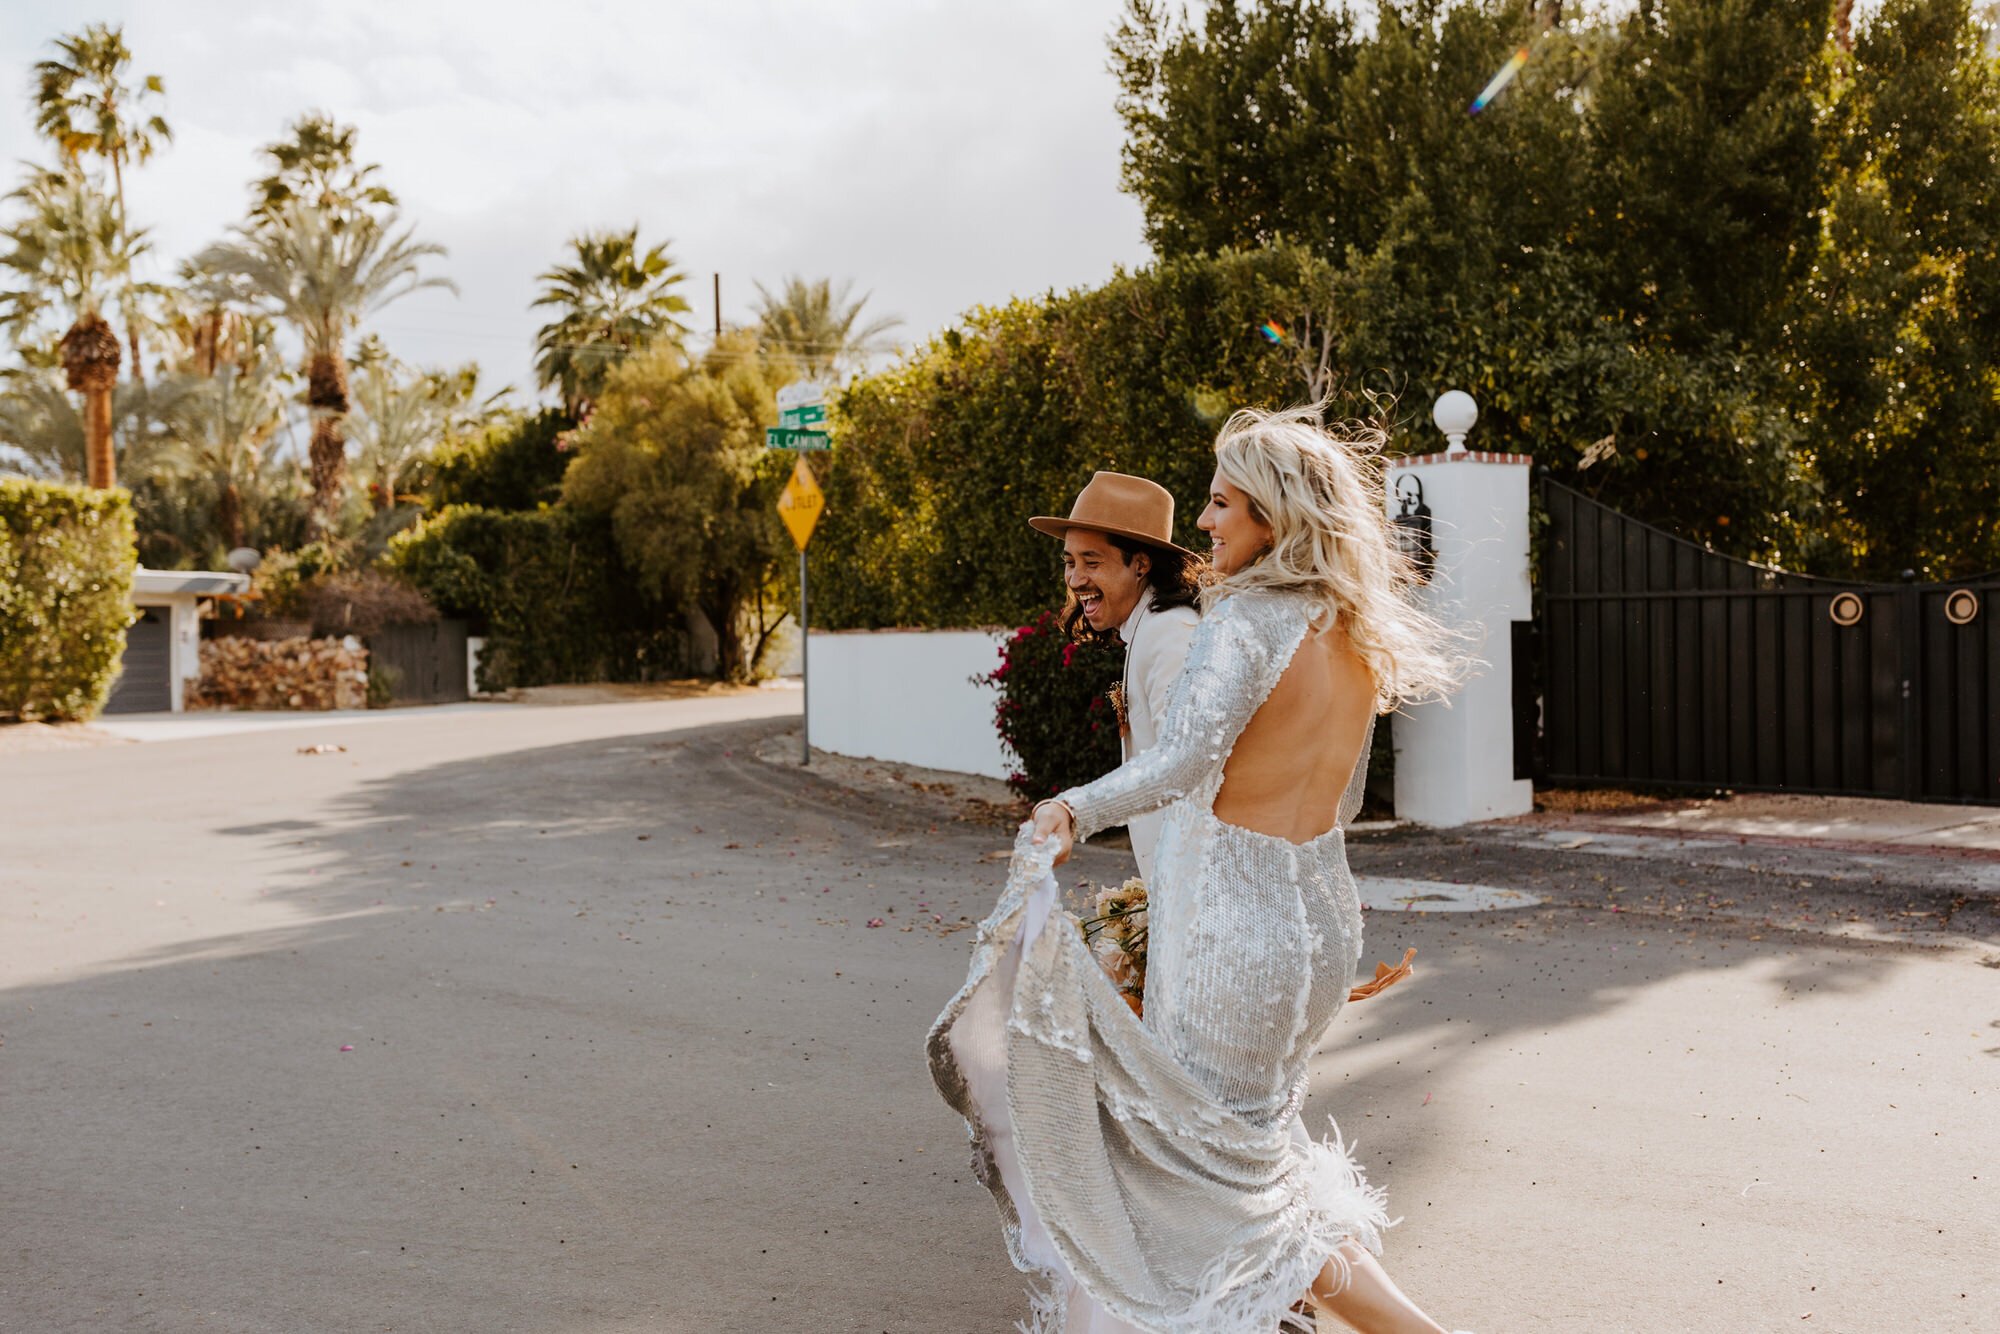 Palm Springs elopement | Silver sequin wedding dress | Palm Springs Wedding Photographer | Tida Svy | www.tidasvy.com